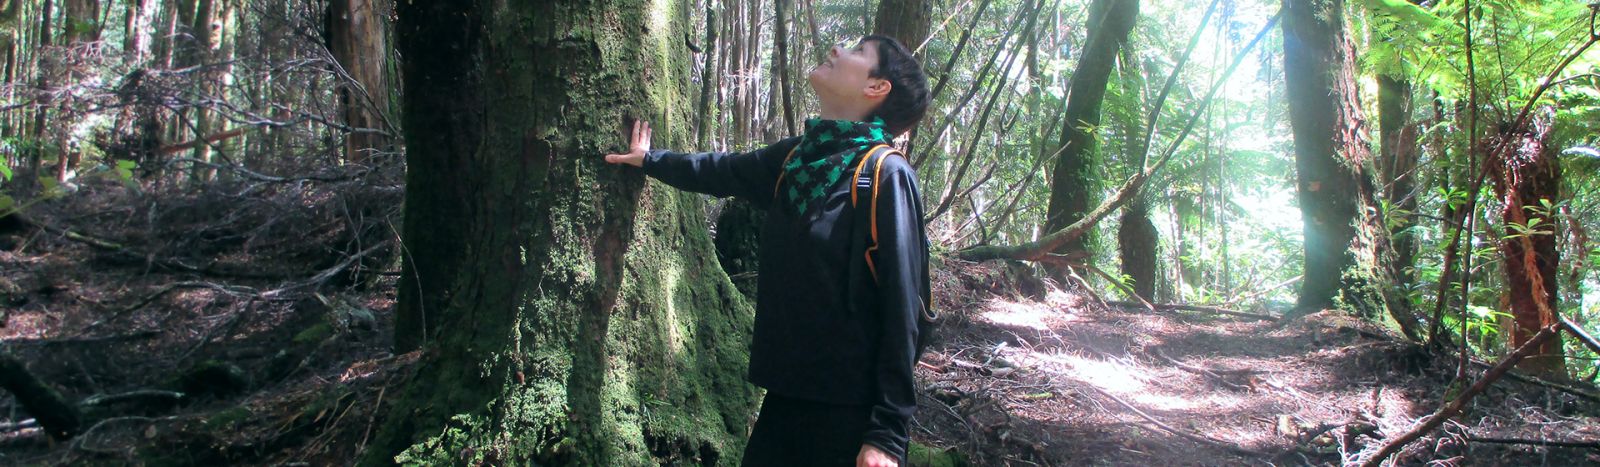 Earth Greetings founder Heide Hackworth in Tasmania's Tarkine forest.